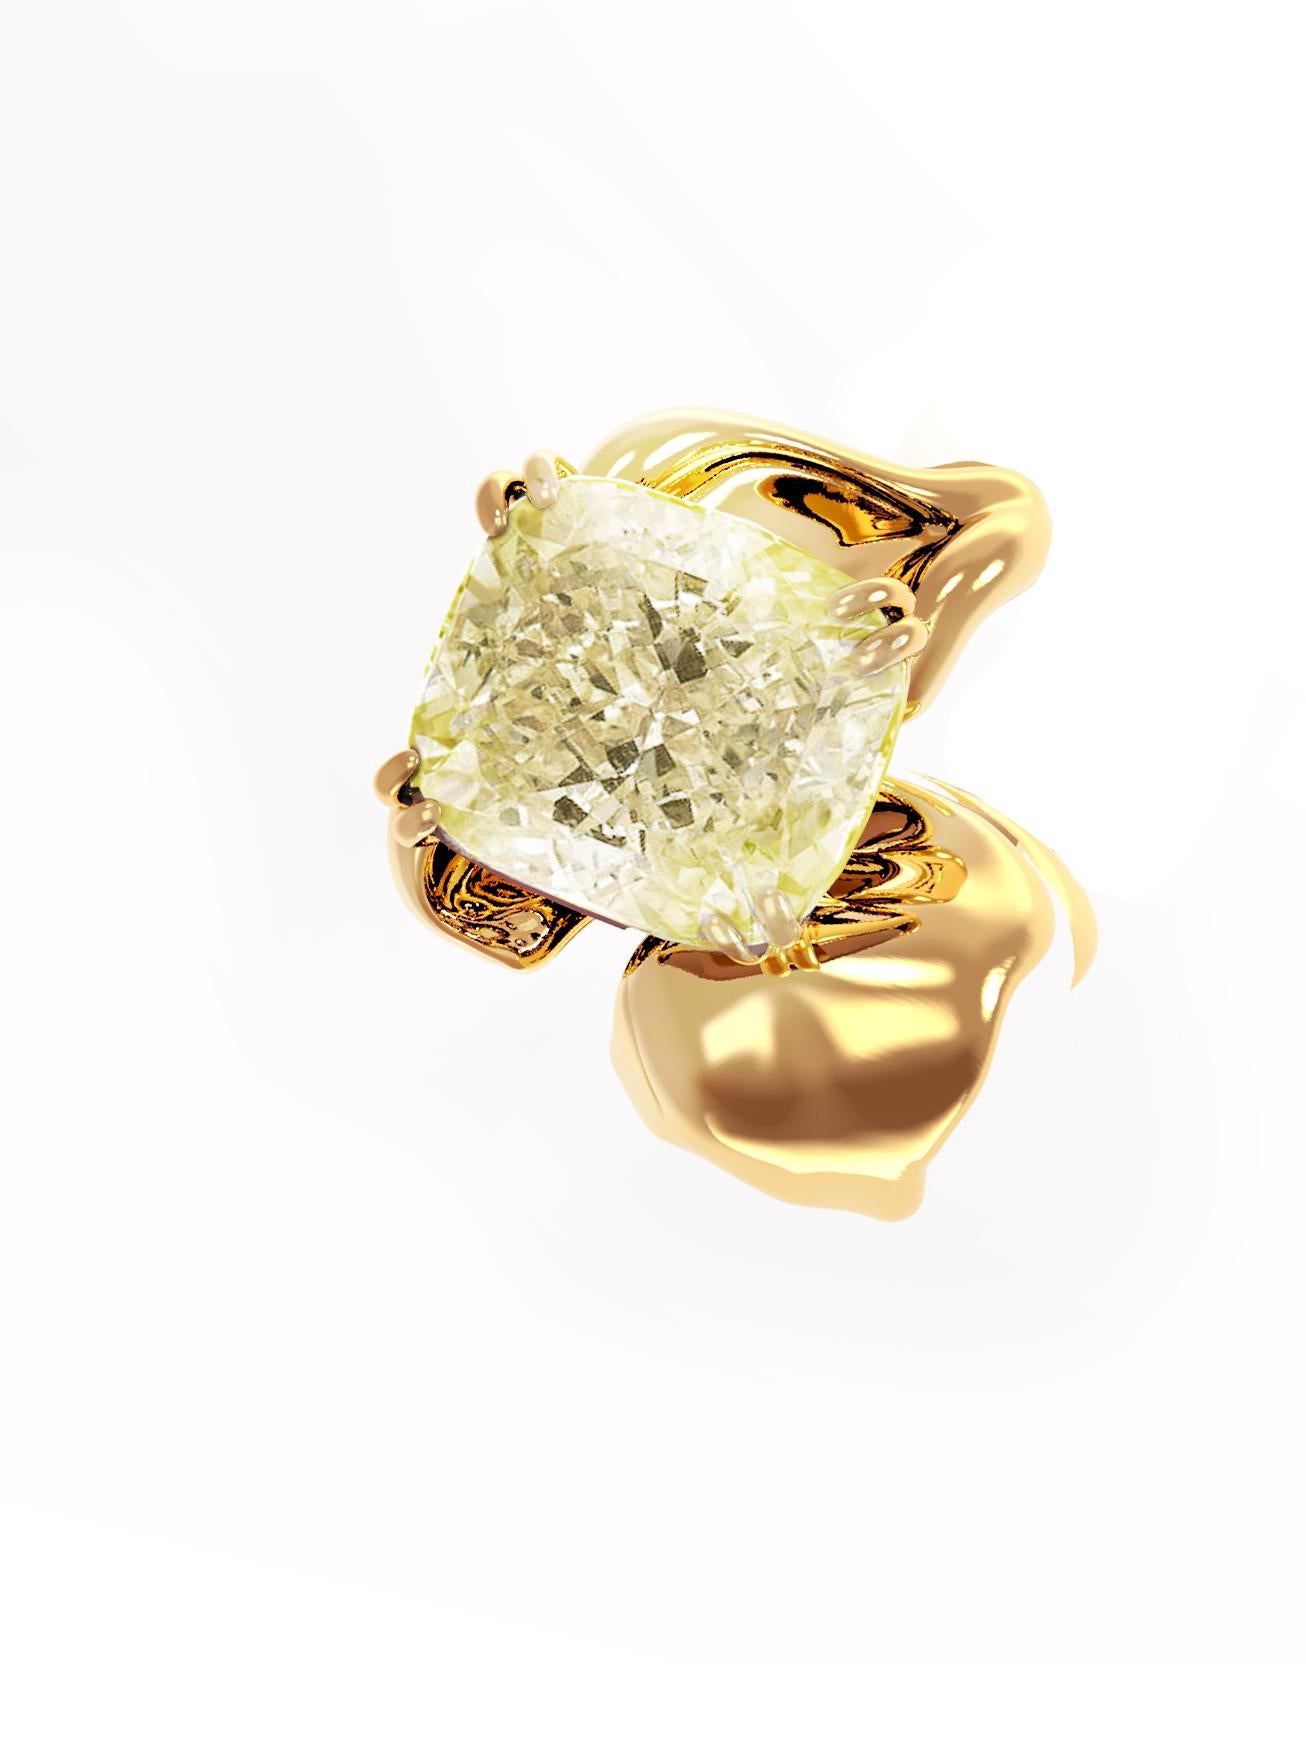 Contemporary 18 Karat Rose Gold Earrings with 4 Carat GIA Certified Fancy Yellow Diamonds